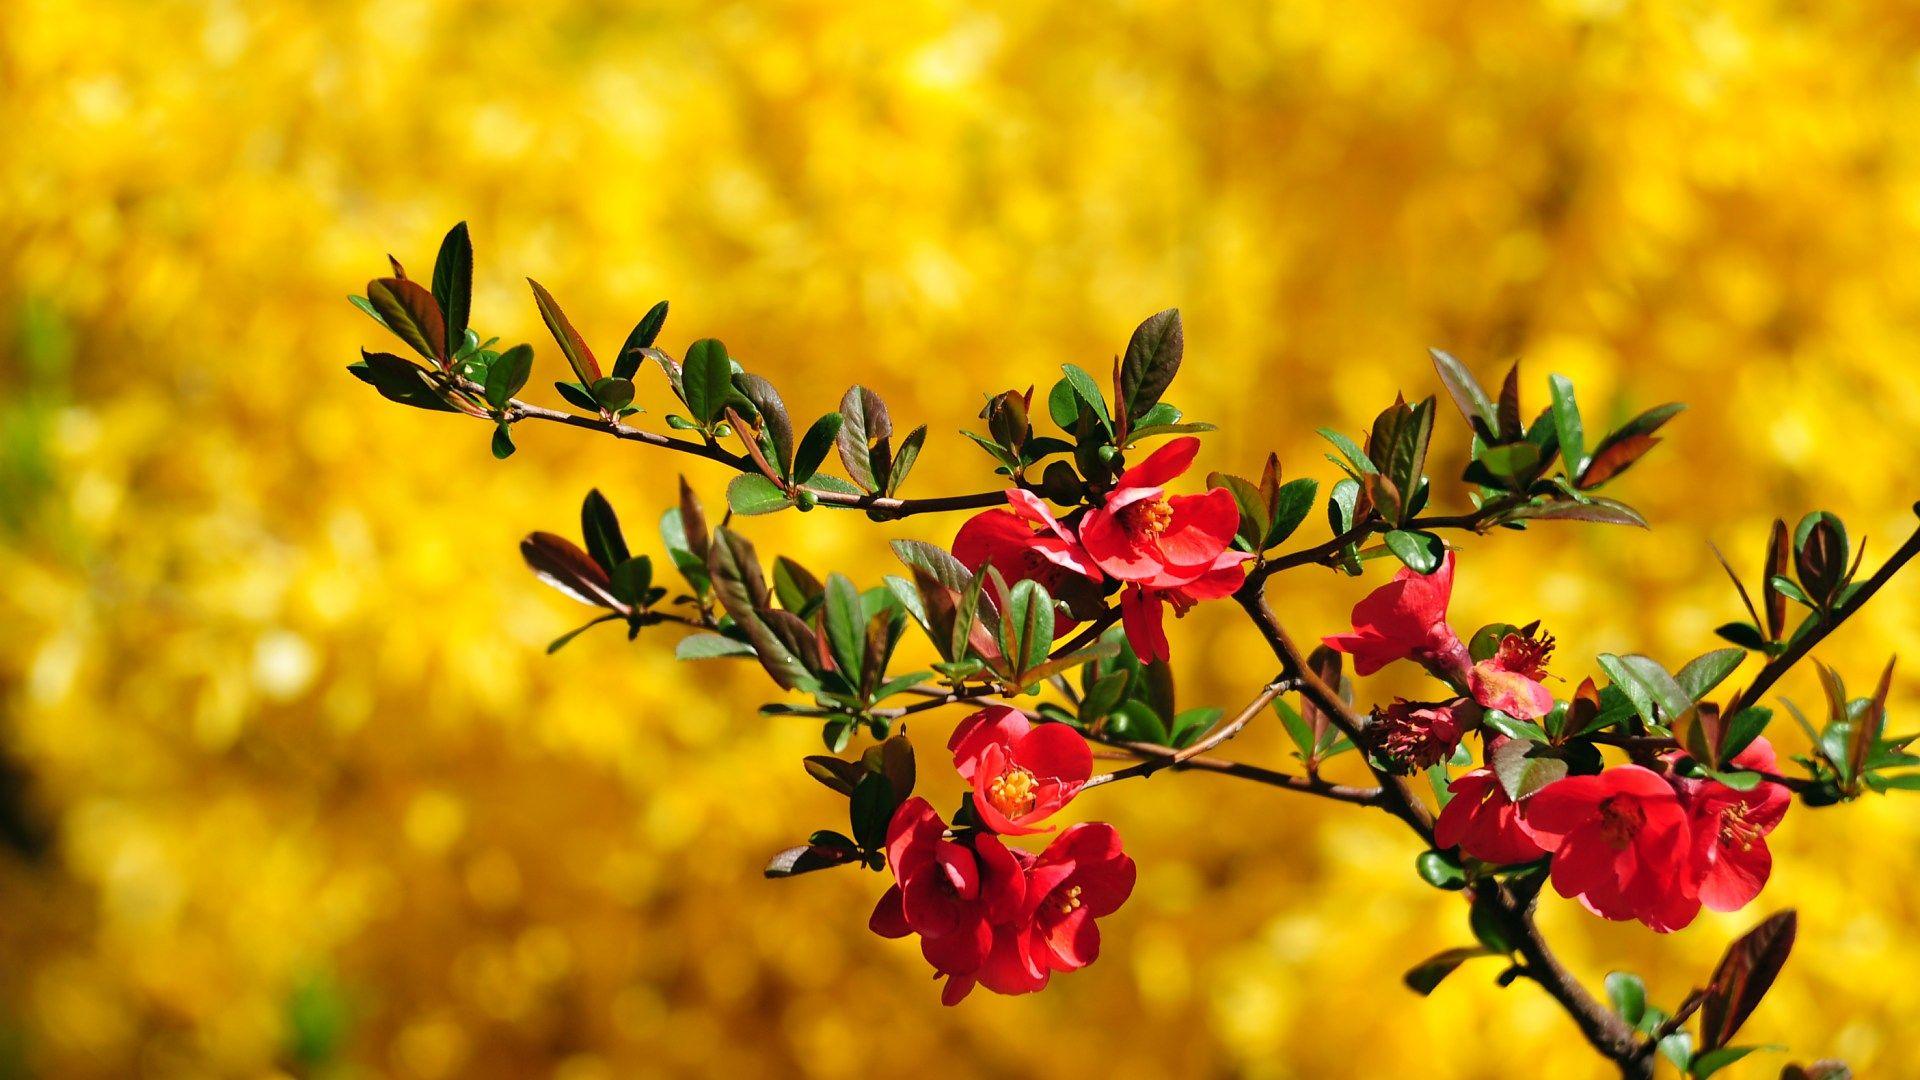 HD Spring Flowers Wallpaper Animal Desktop Picture, Free